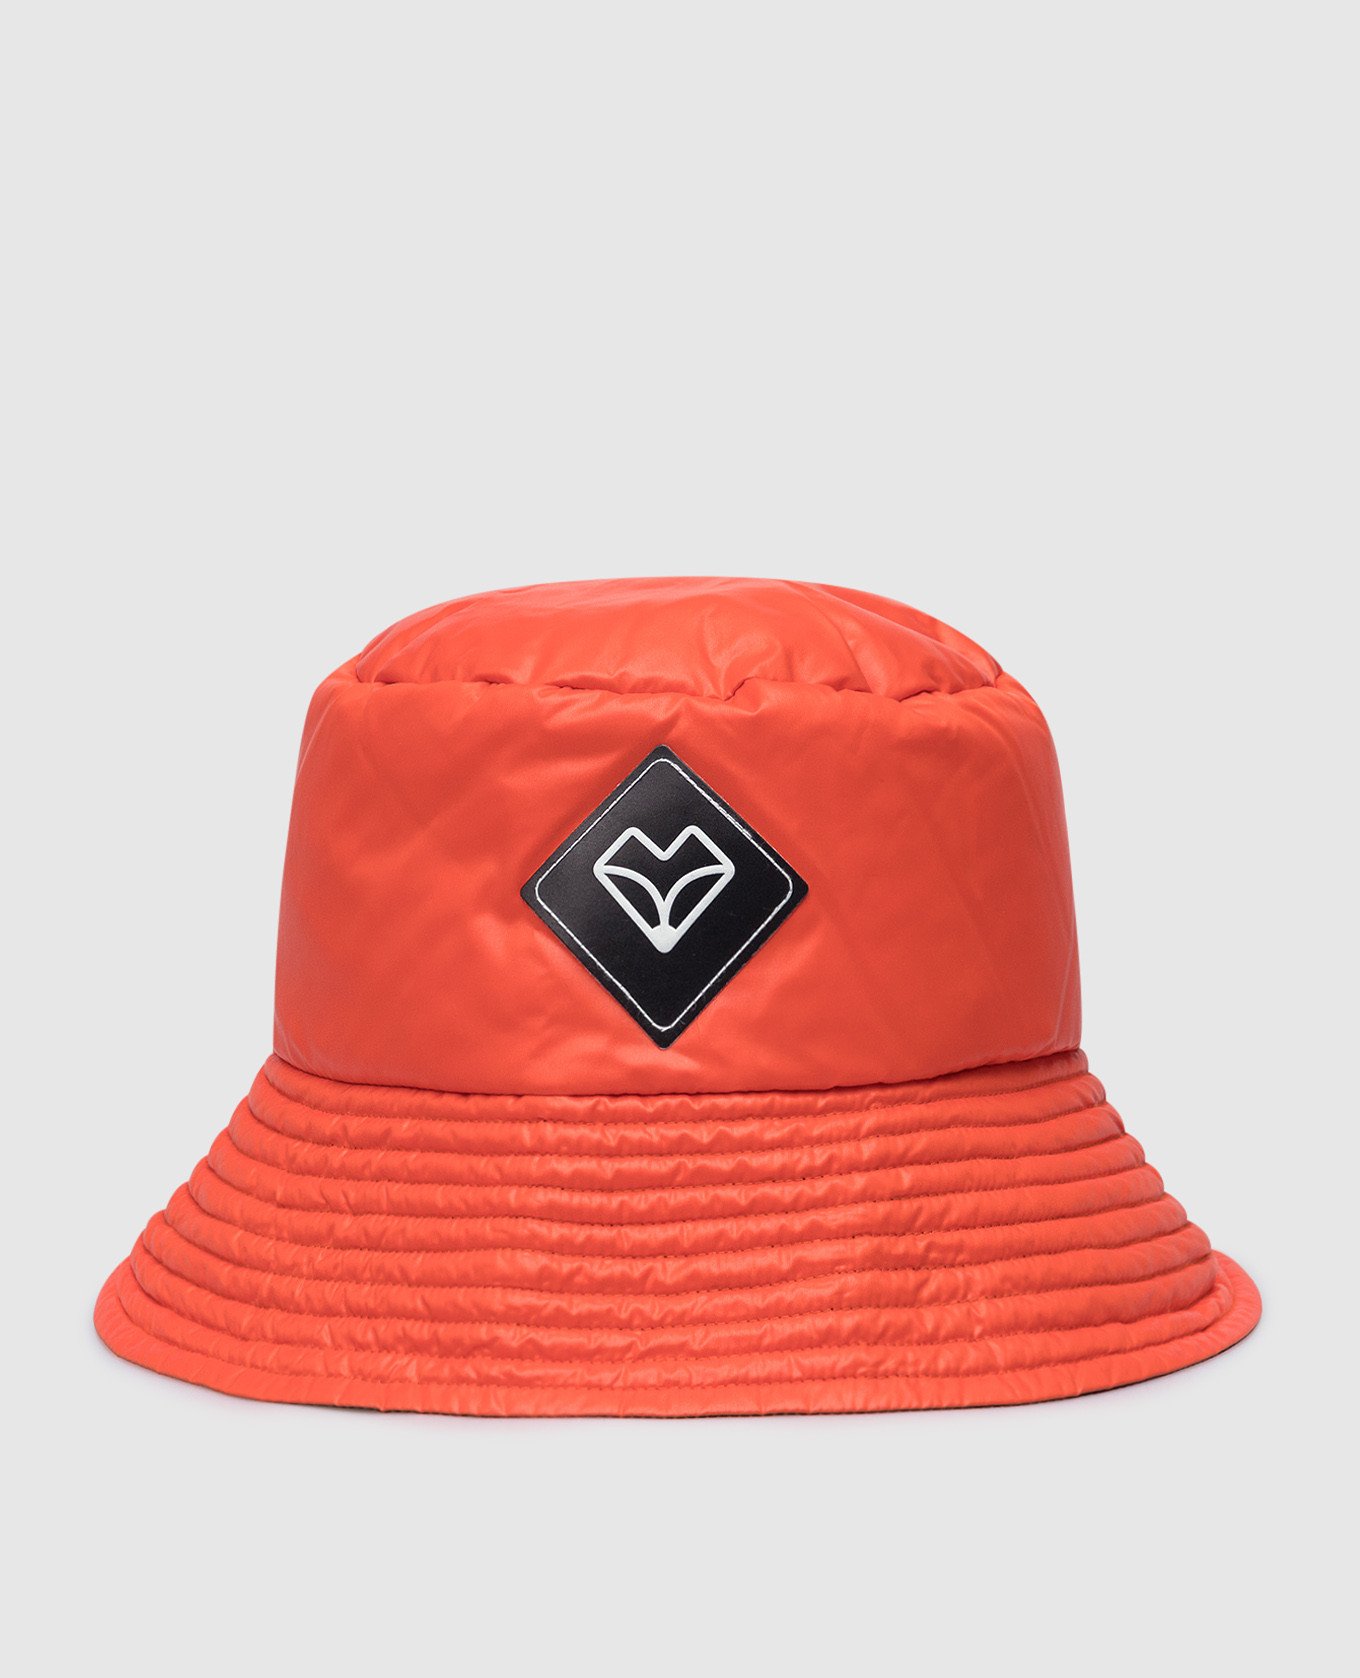 Orange hat with logo